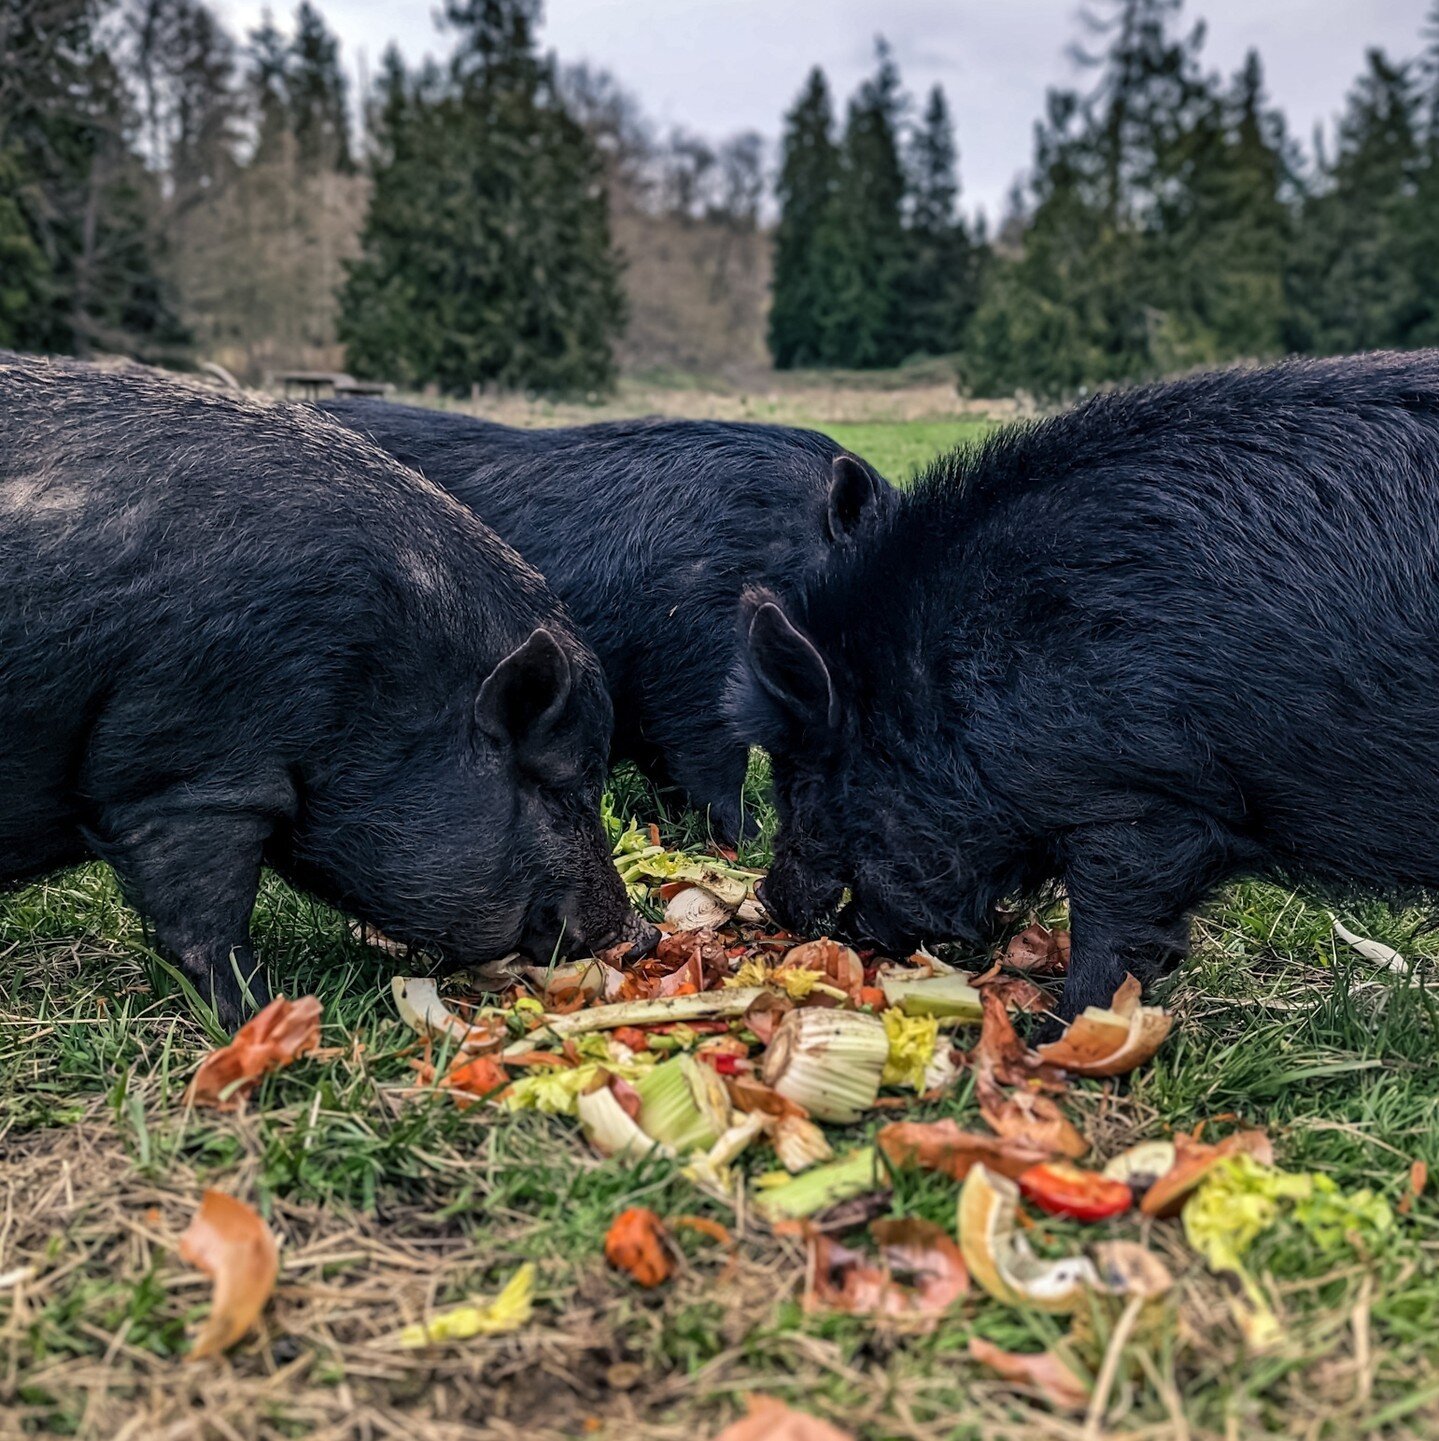 Piggy Paradise! We love Seabiscuit veggie donation day 💚⁠
⁠
⁠
#farmsanctuary #animalsanctuary #rescue #friendsnotfood #herewithusnotforus #govegan #goveg #vegan #veganfortheanimals #animalsofinstagram #someonenotsomething #whidbeyisland⁠
#pigs #pigs